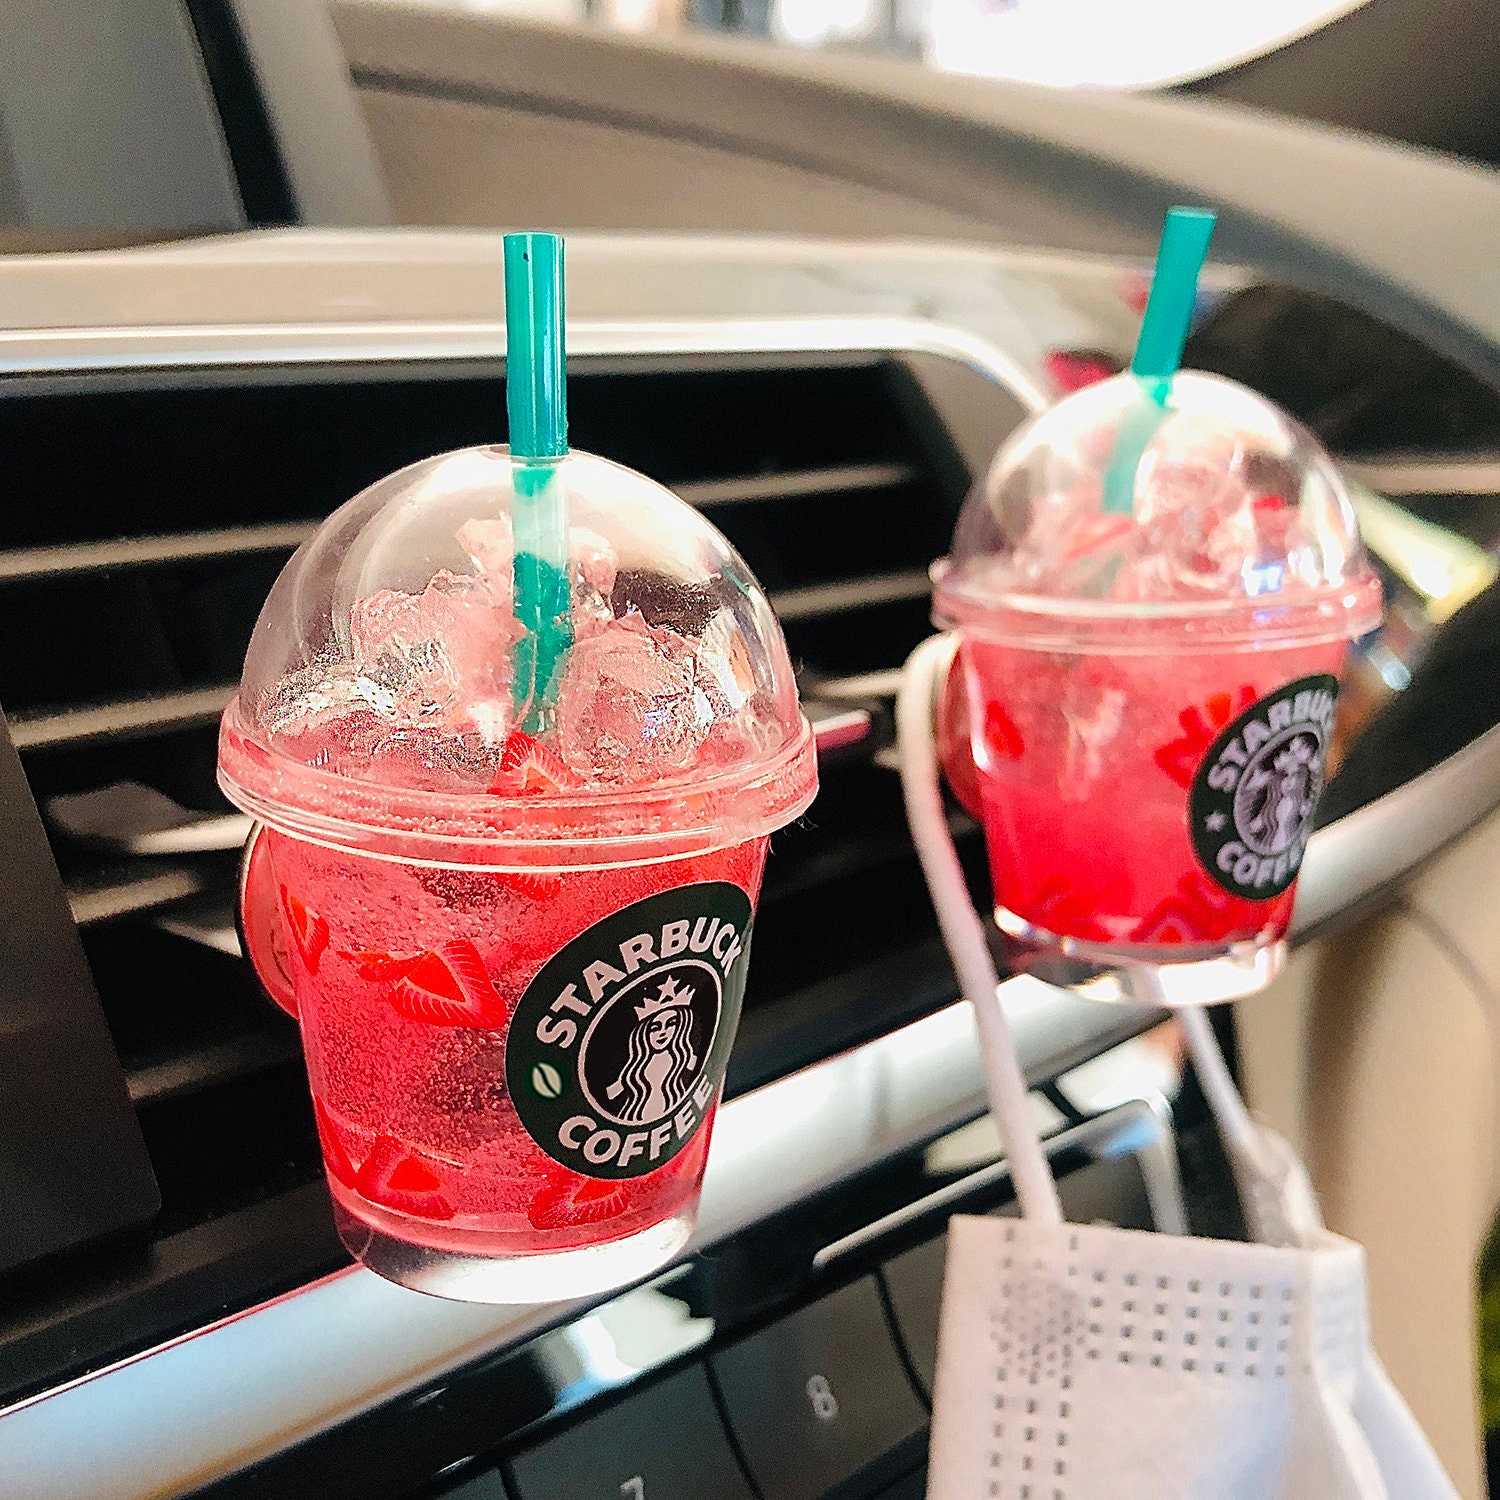 Starbucks Pink Drink Keychain – Kyna's Sweet Life